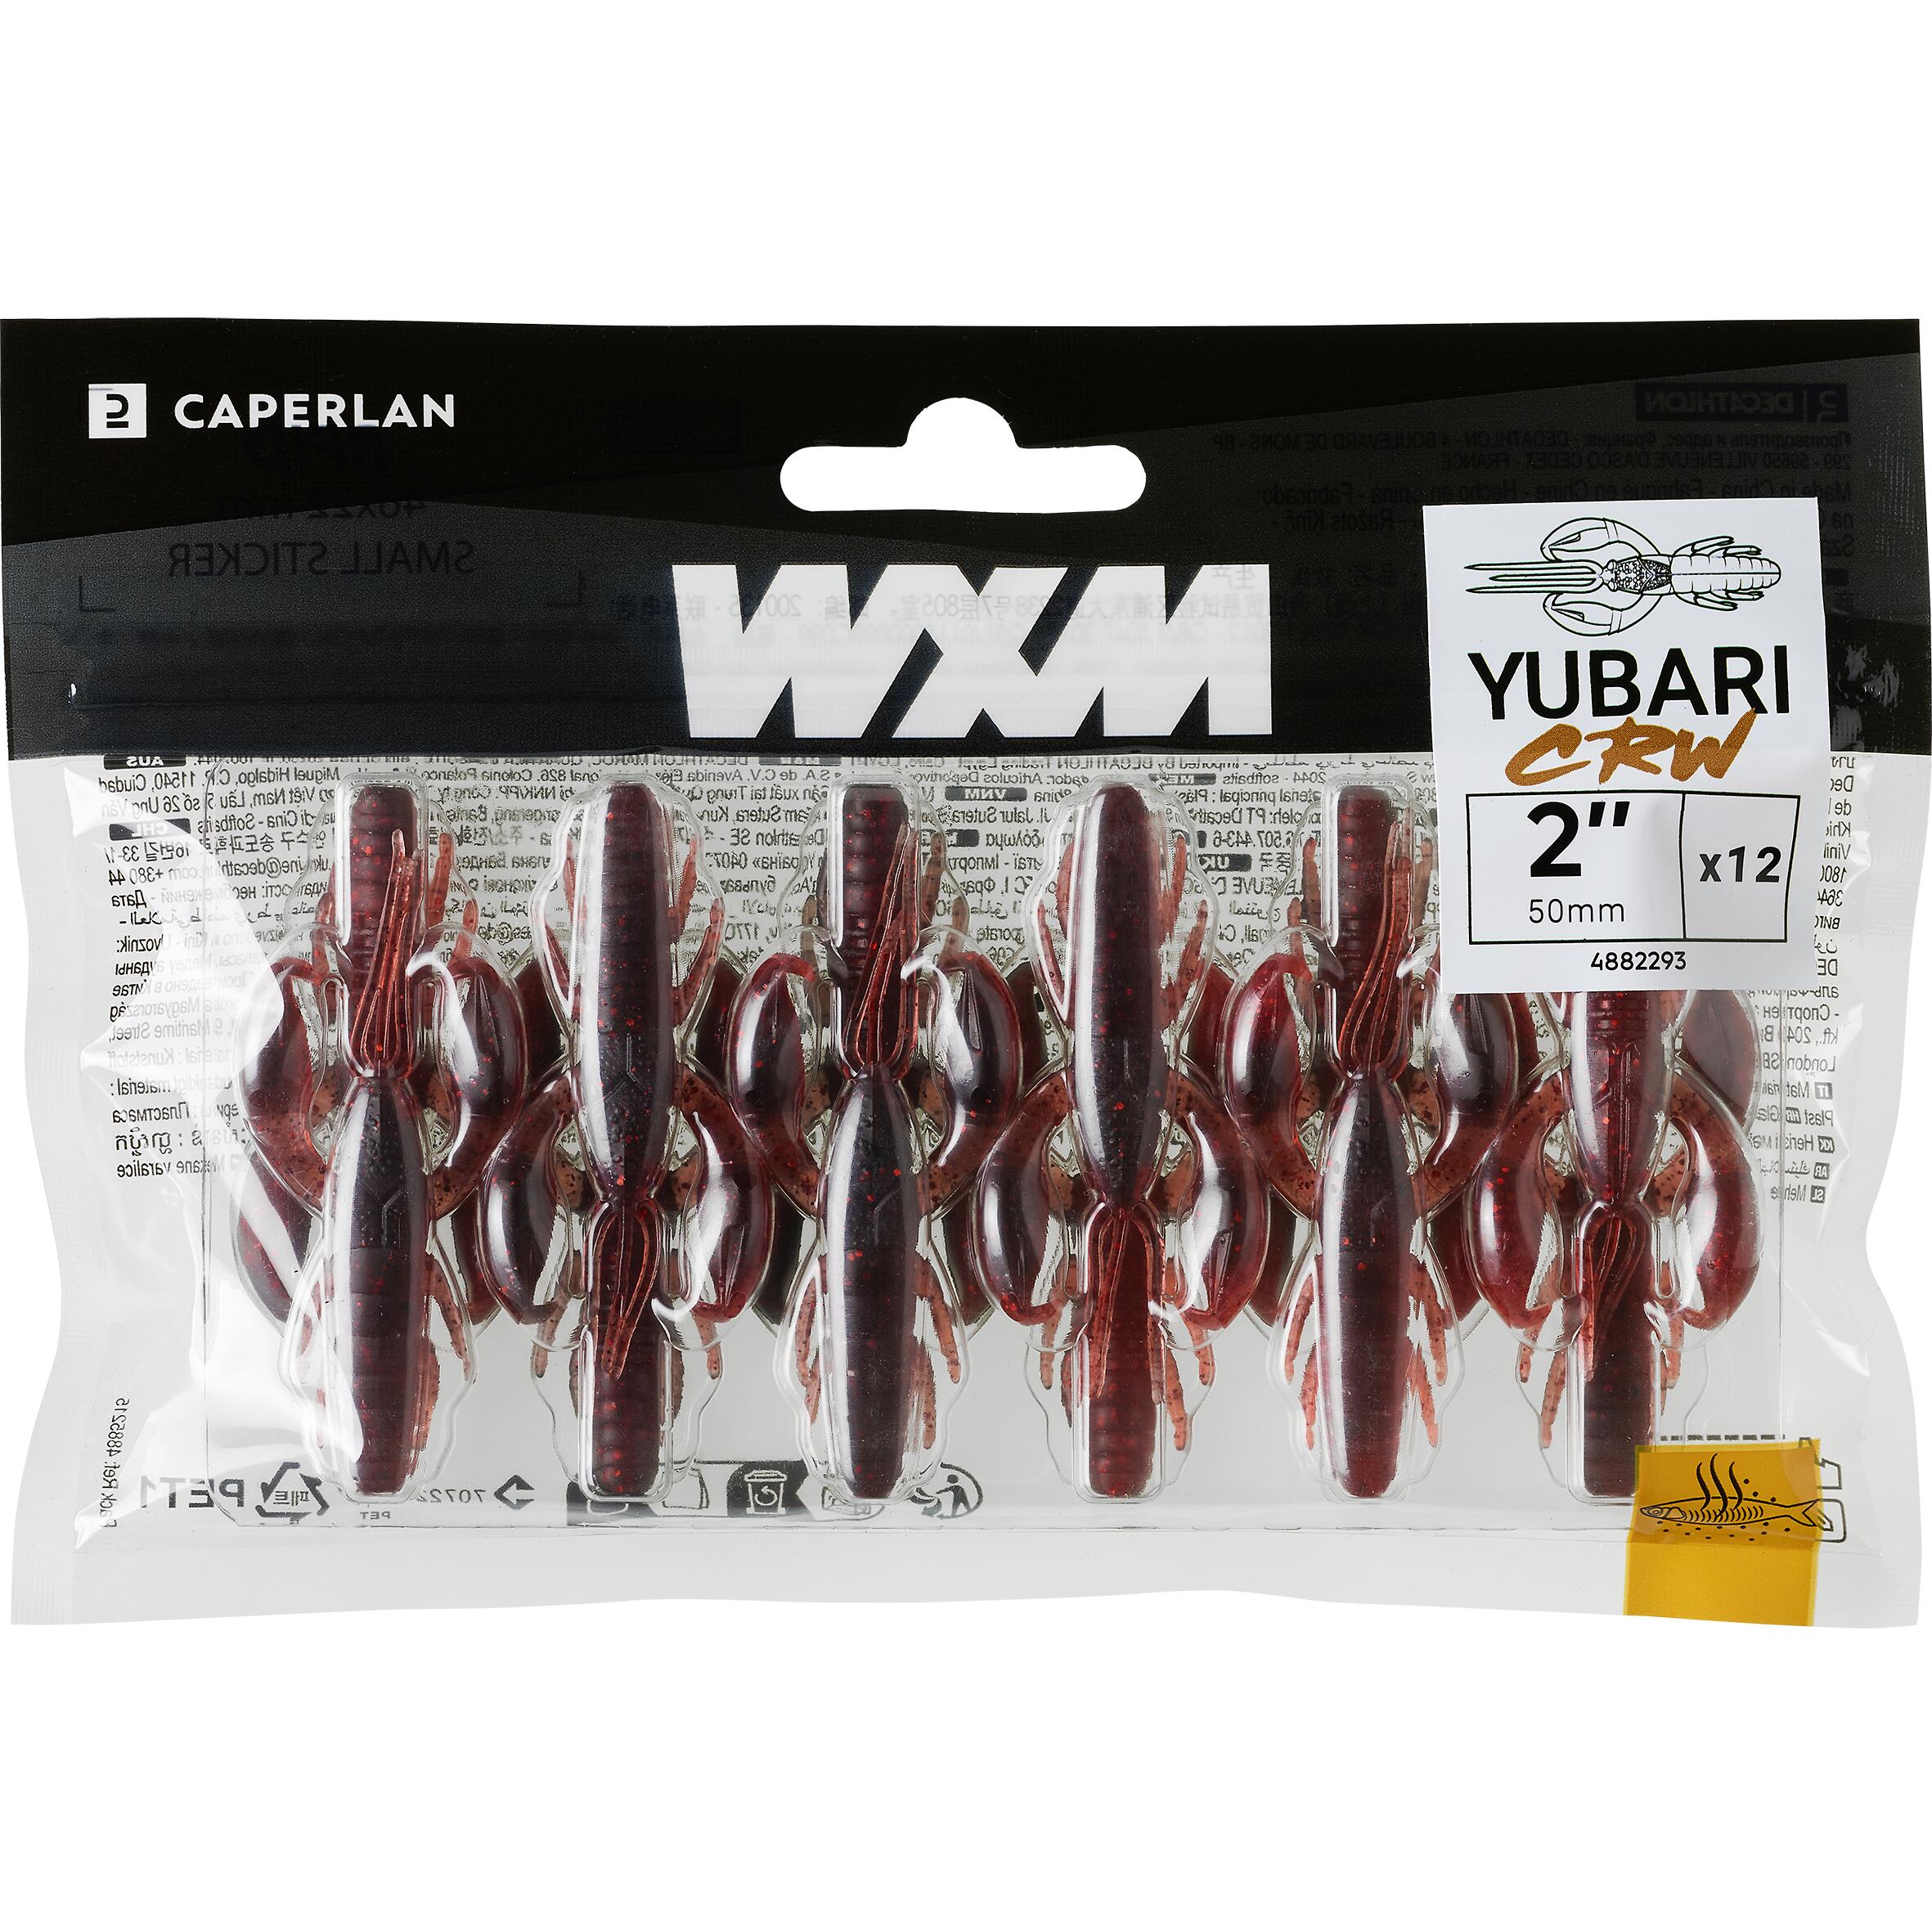 SOFT CRAYFISH LURE WITH WXM YUBARI CRW 50 BLACK RED CRAW ATTRACTANT 6/8